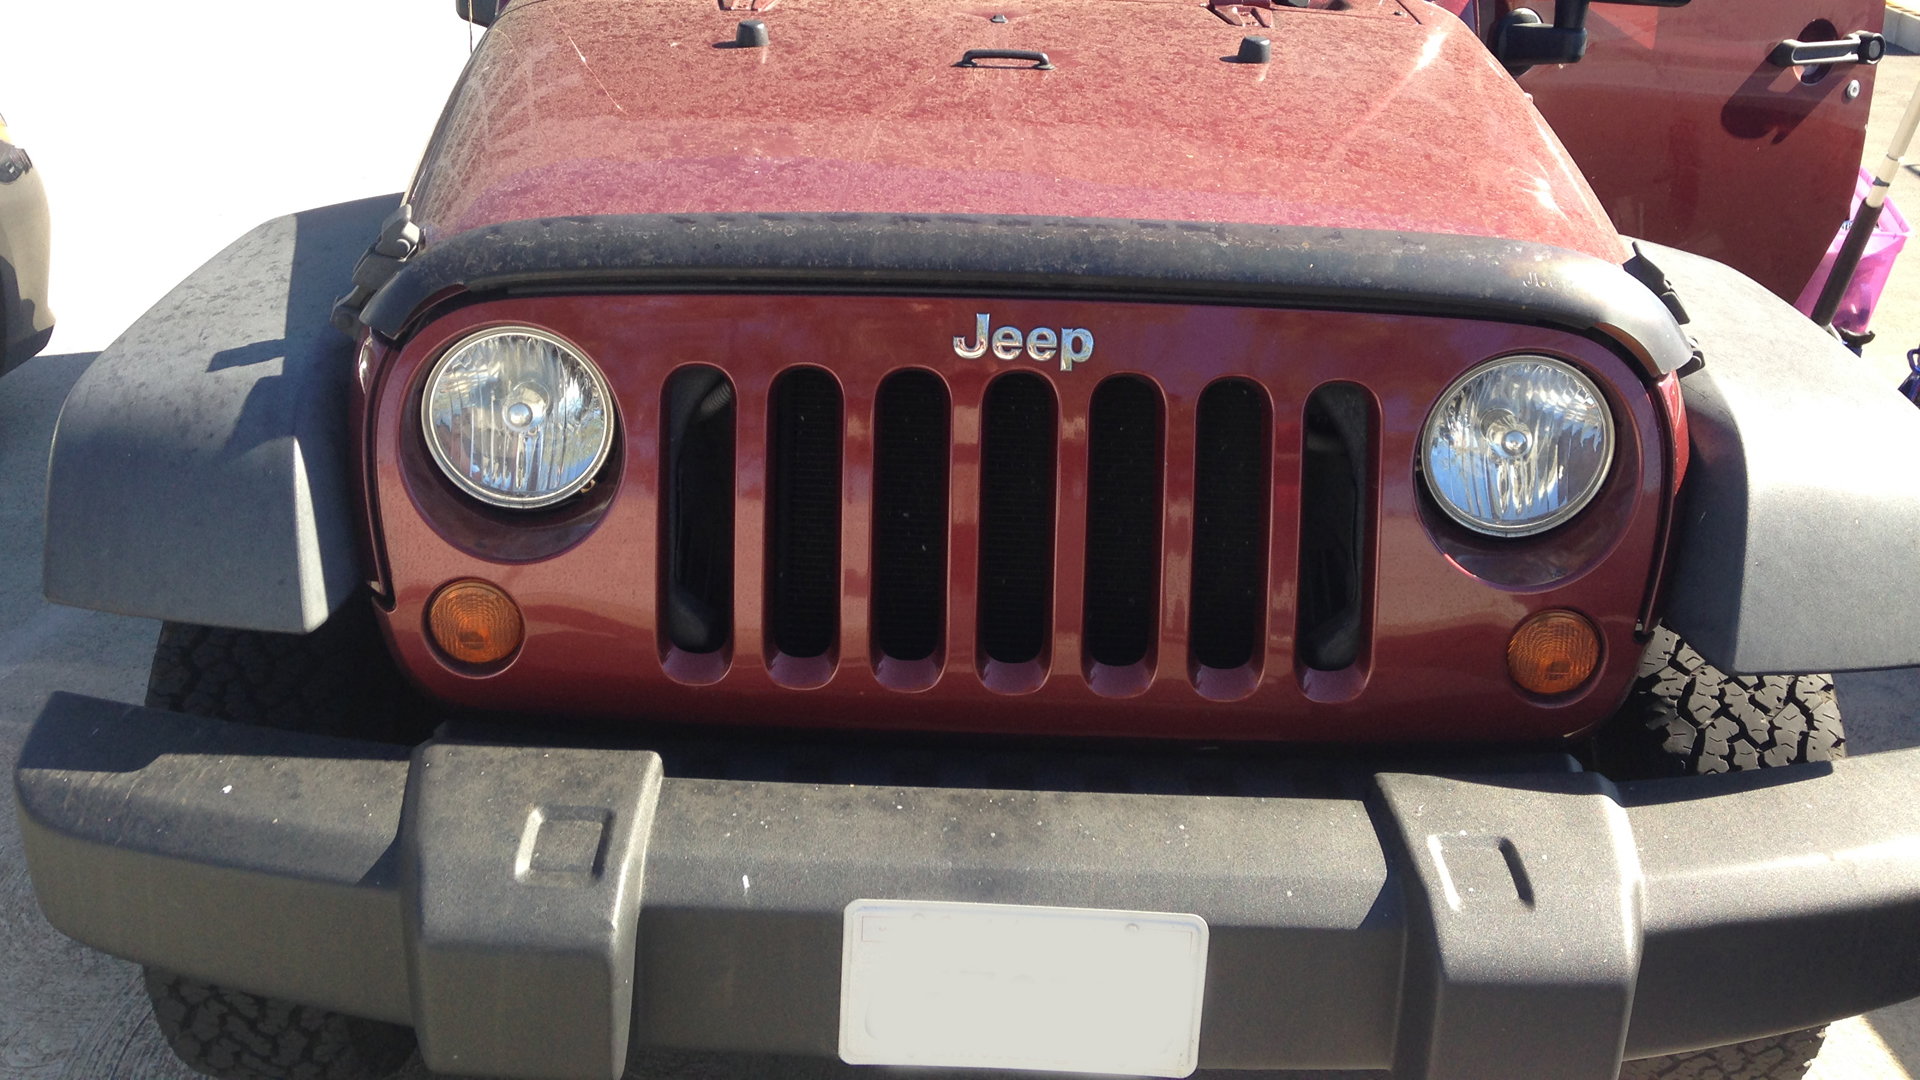 Jeep Wrangler JK: How to Remove Front Factory Bumper | Jk-forum